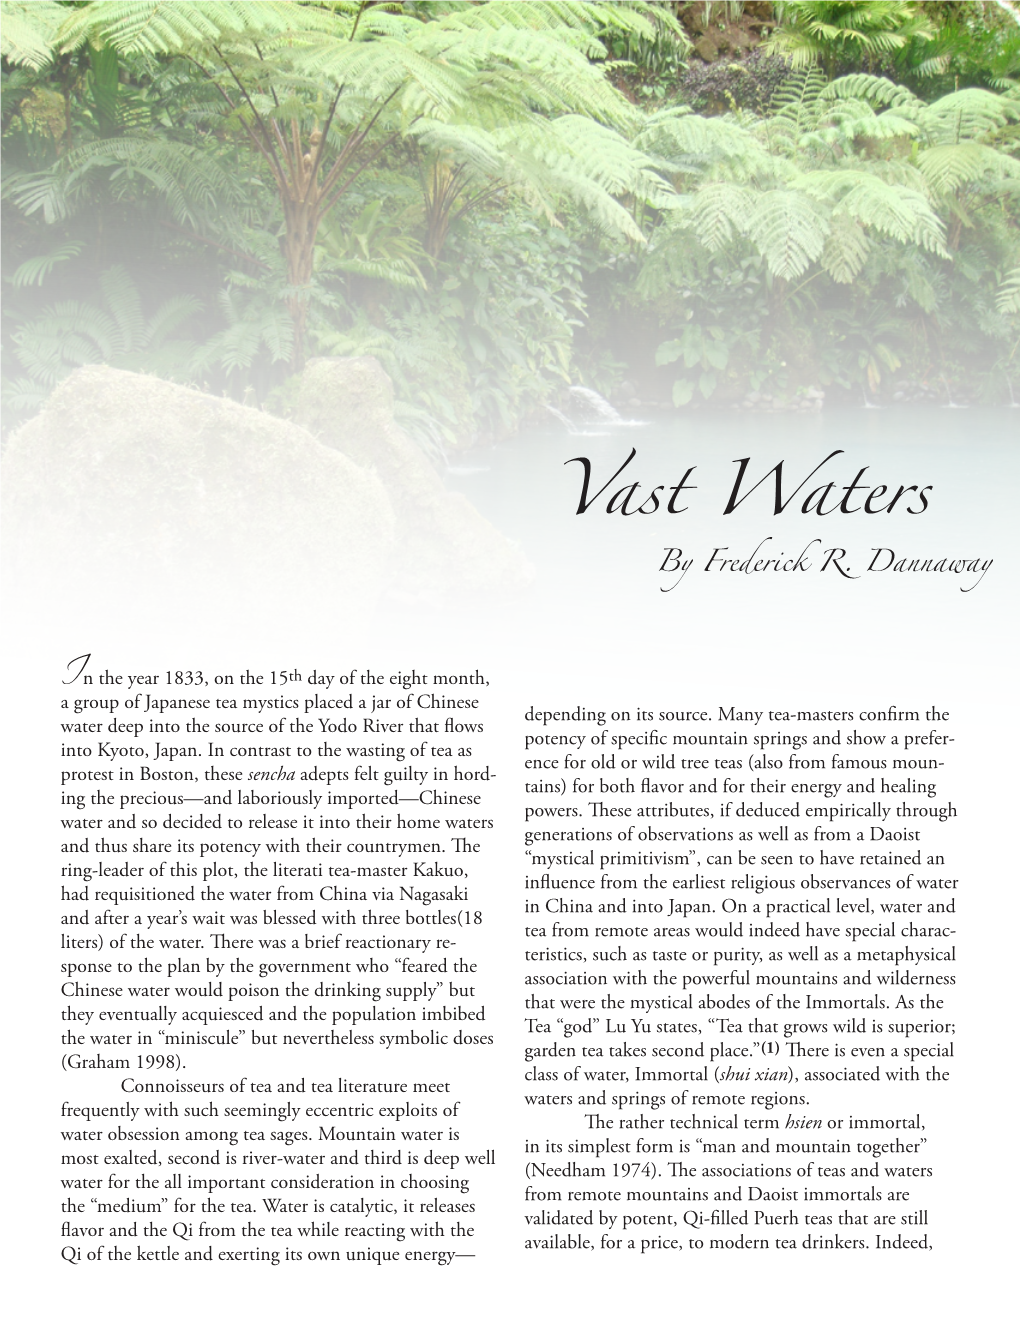 Vast Waters by Frederick R